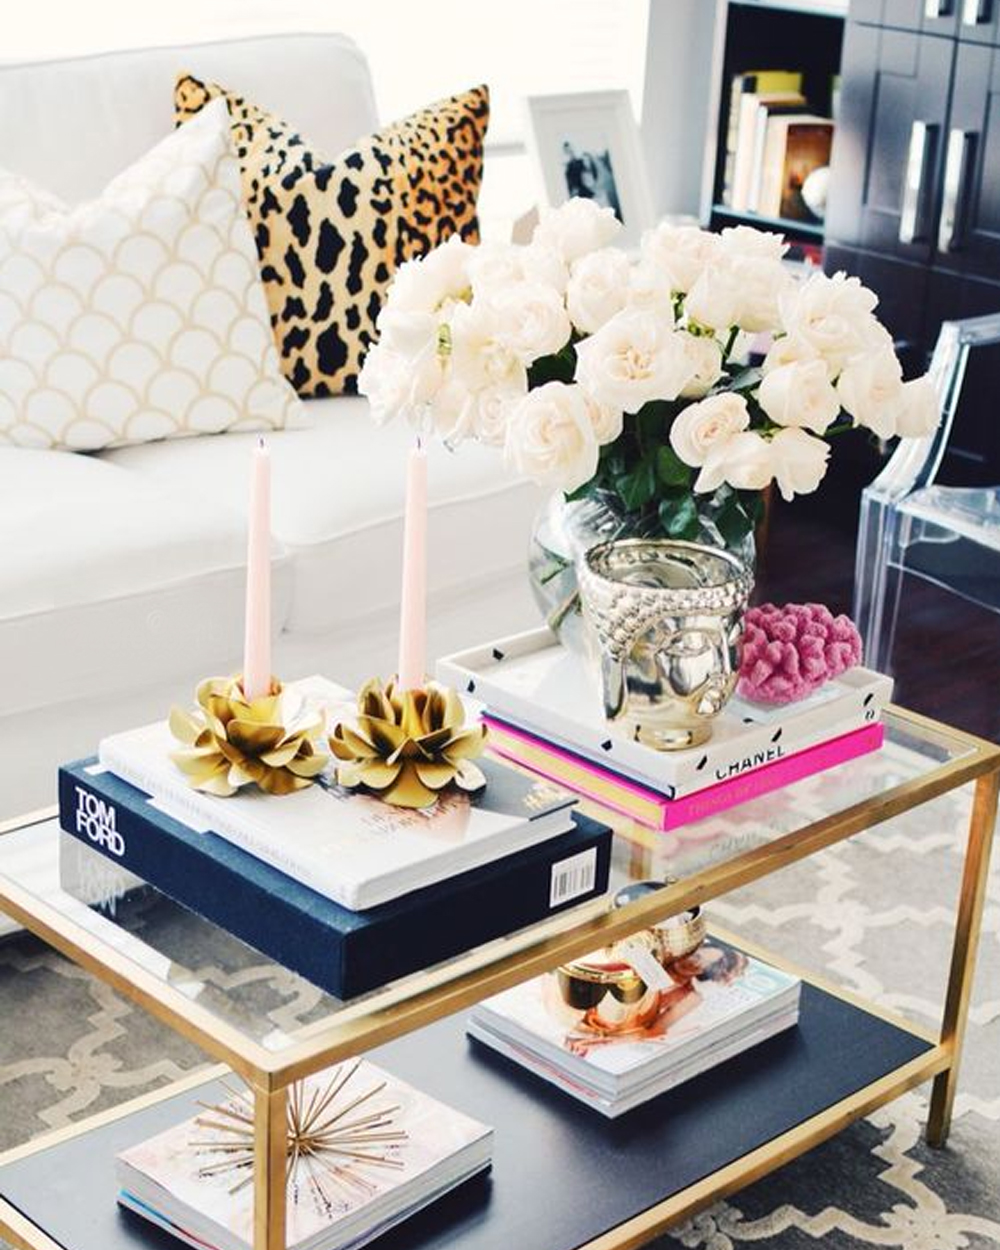 8 inspiring coffee table books every interior design ...